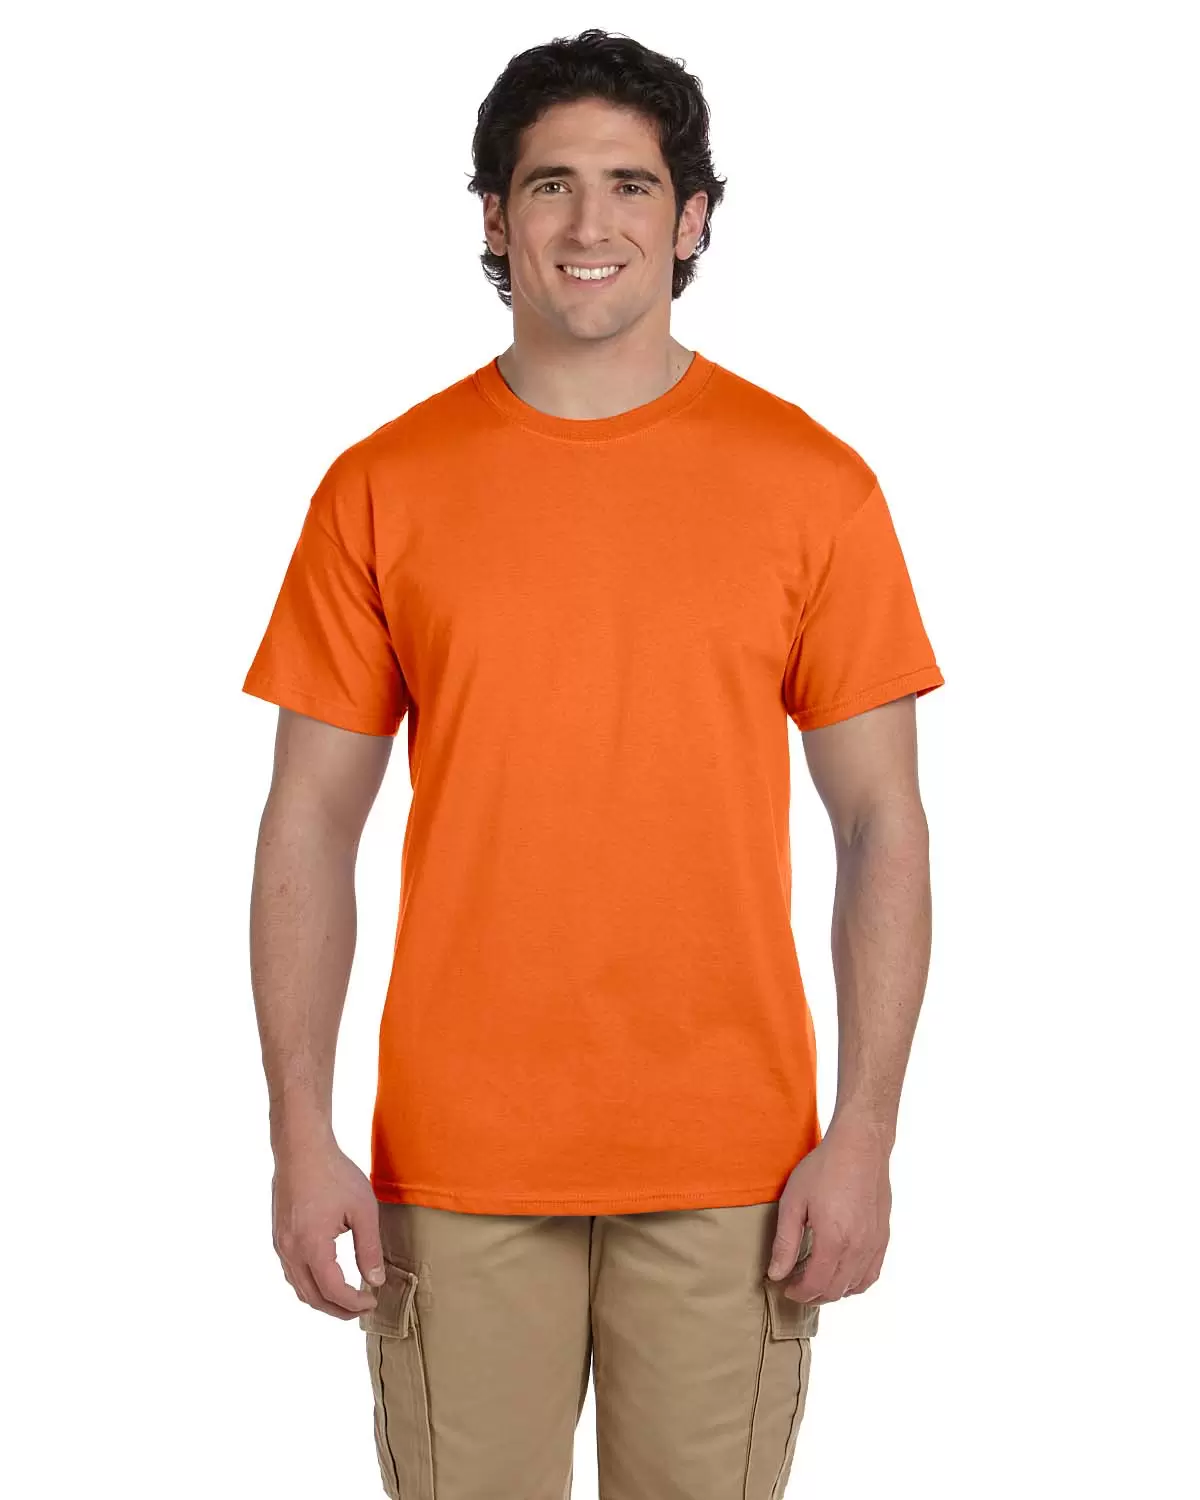 Youth 5.2 oz., 50/50 ComfortBlend EcoSmart T-Shirt - It's All Custom